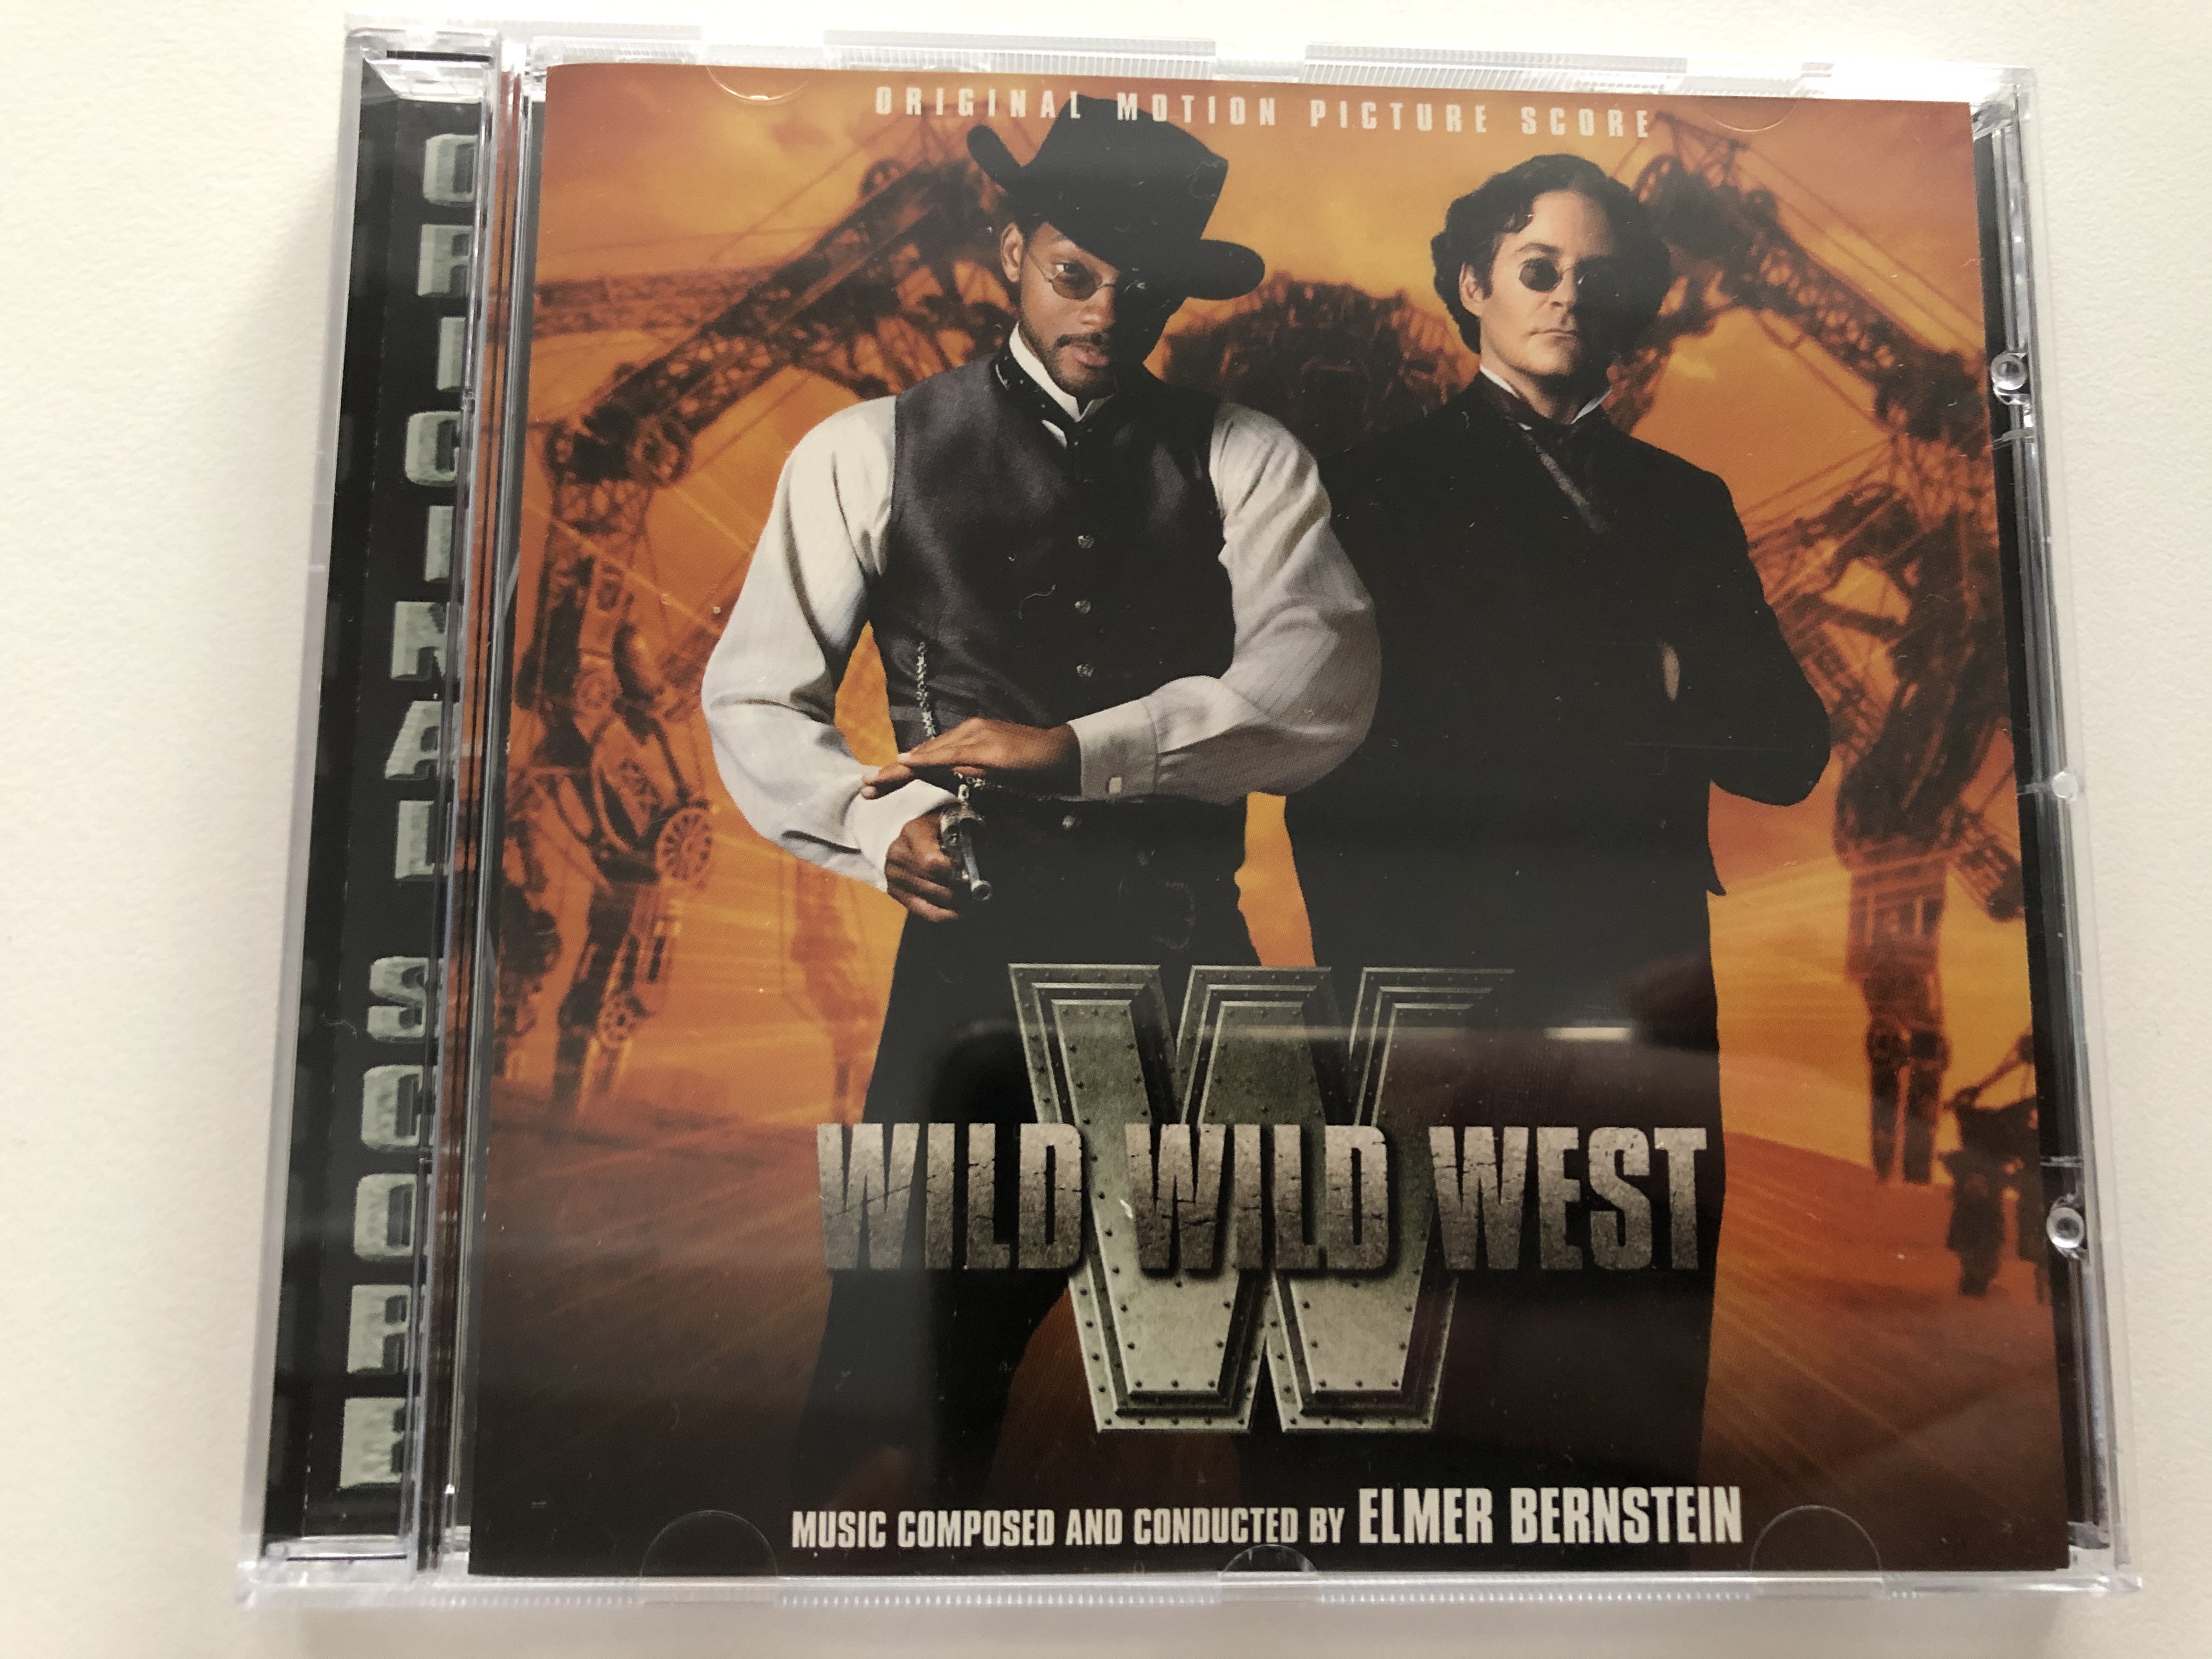 wild-wild-west-original-motion-picture-score-music-composed-and-conducted-by-elmer-bernstein-var-se-sarabande-audio-cd-1999-vsd-6042-1-.jpg